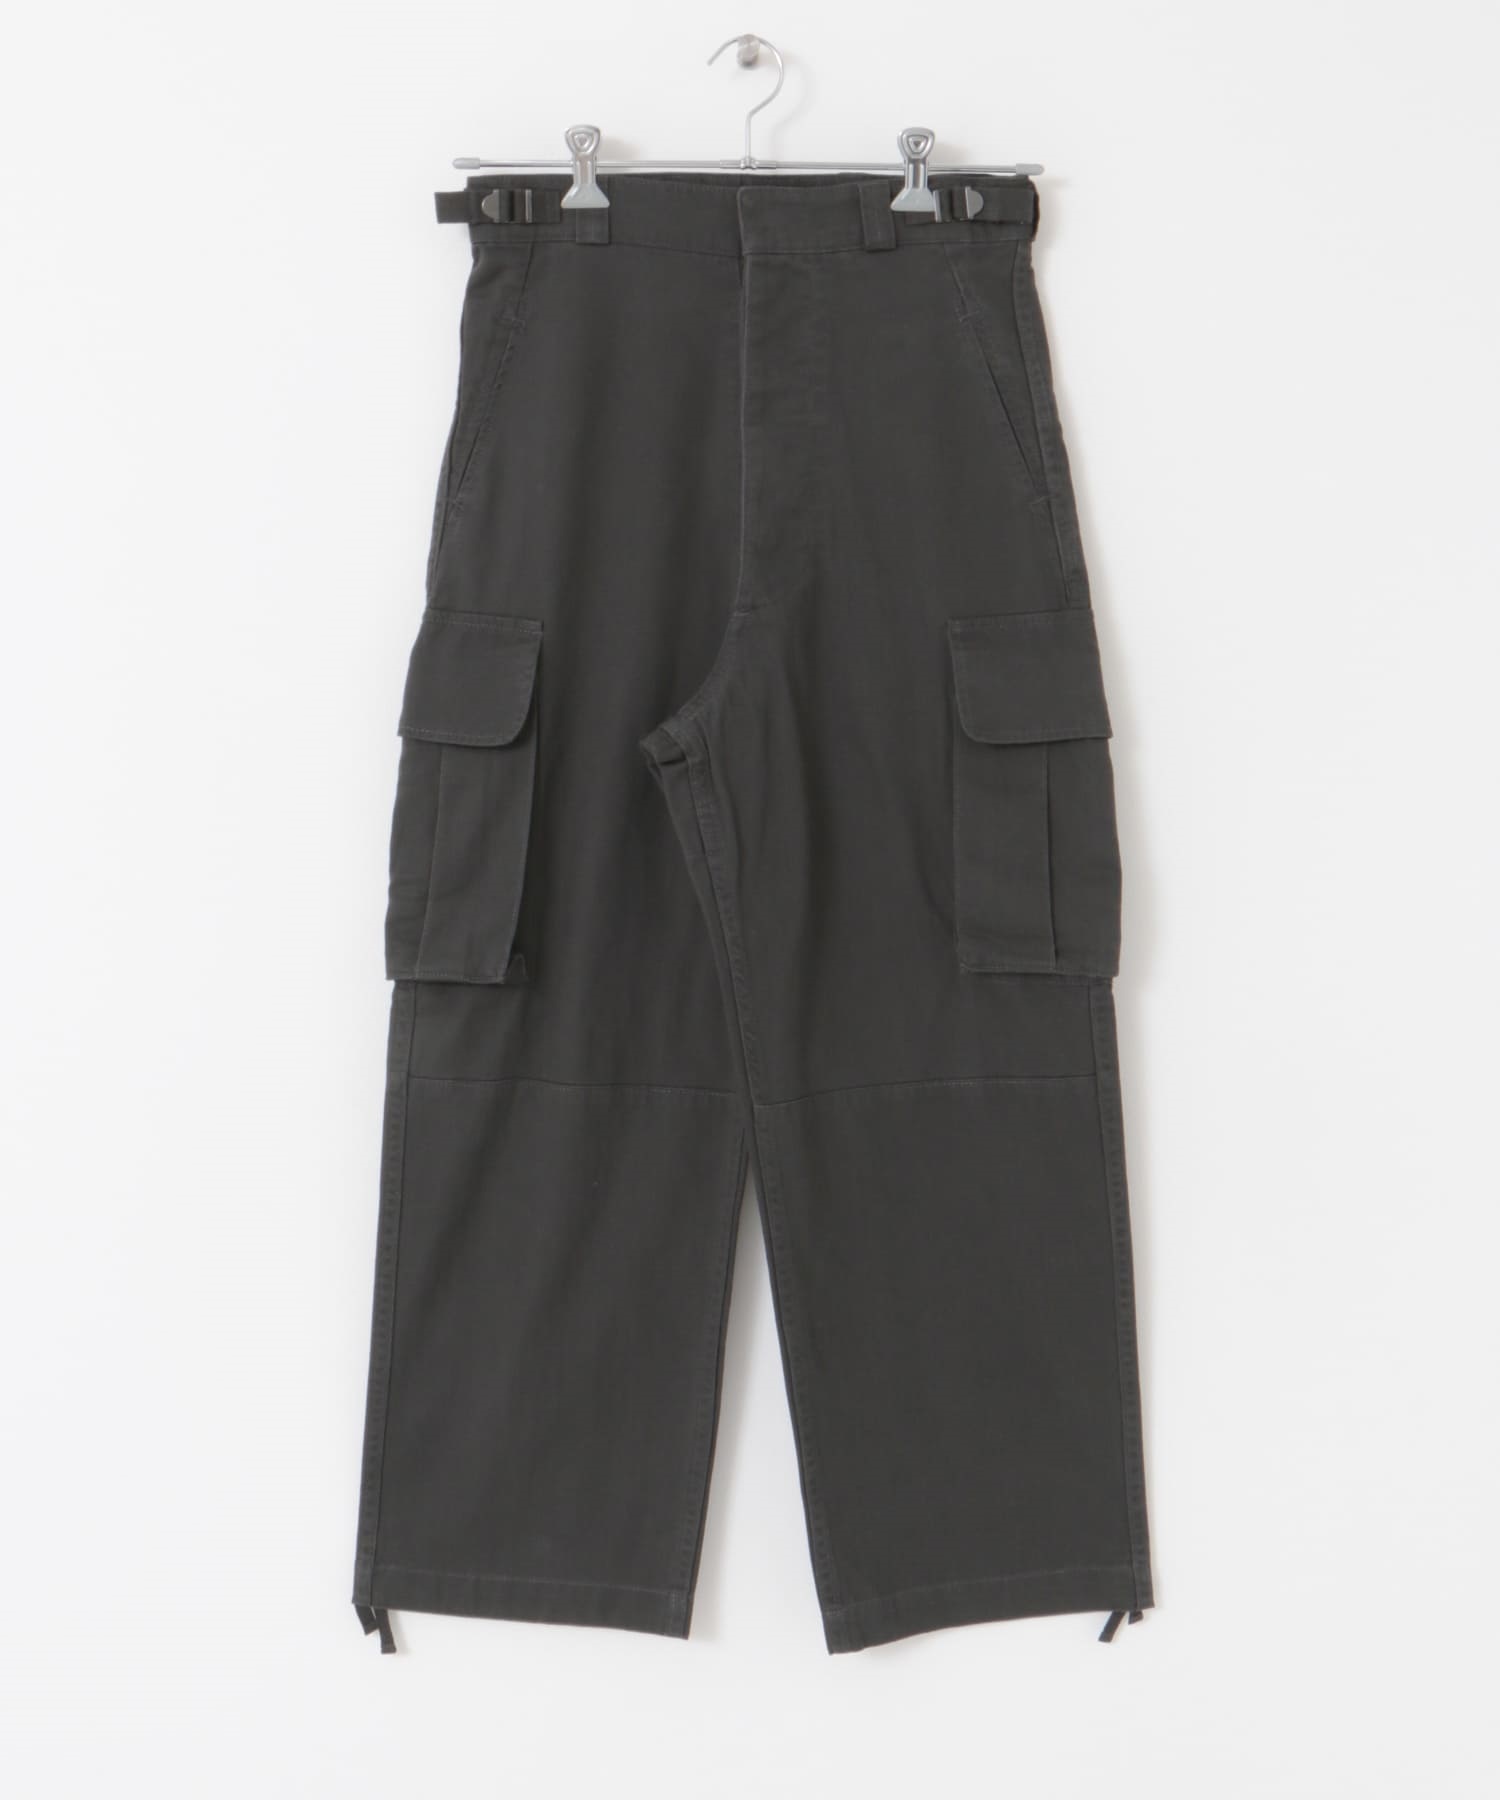 復古感工作褲(炭灰色-36-CHARCOAL GRAY)